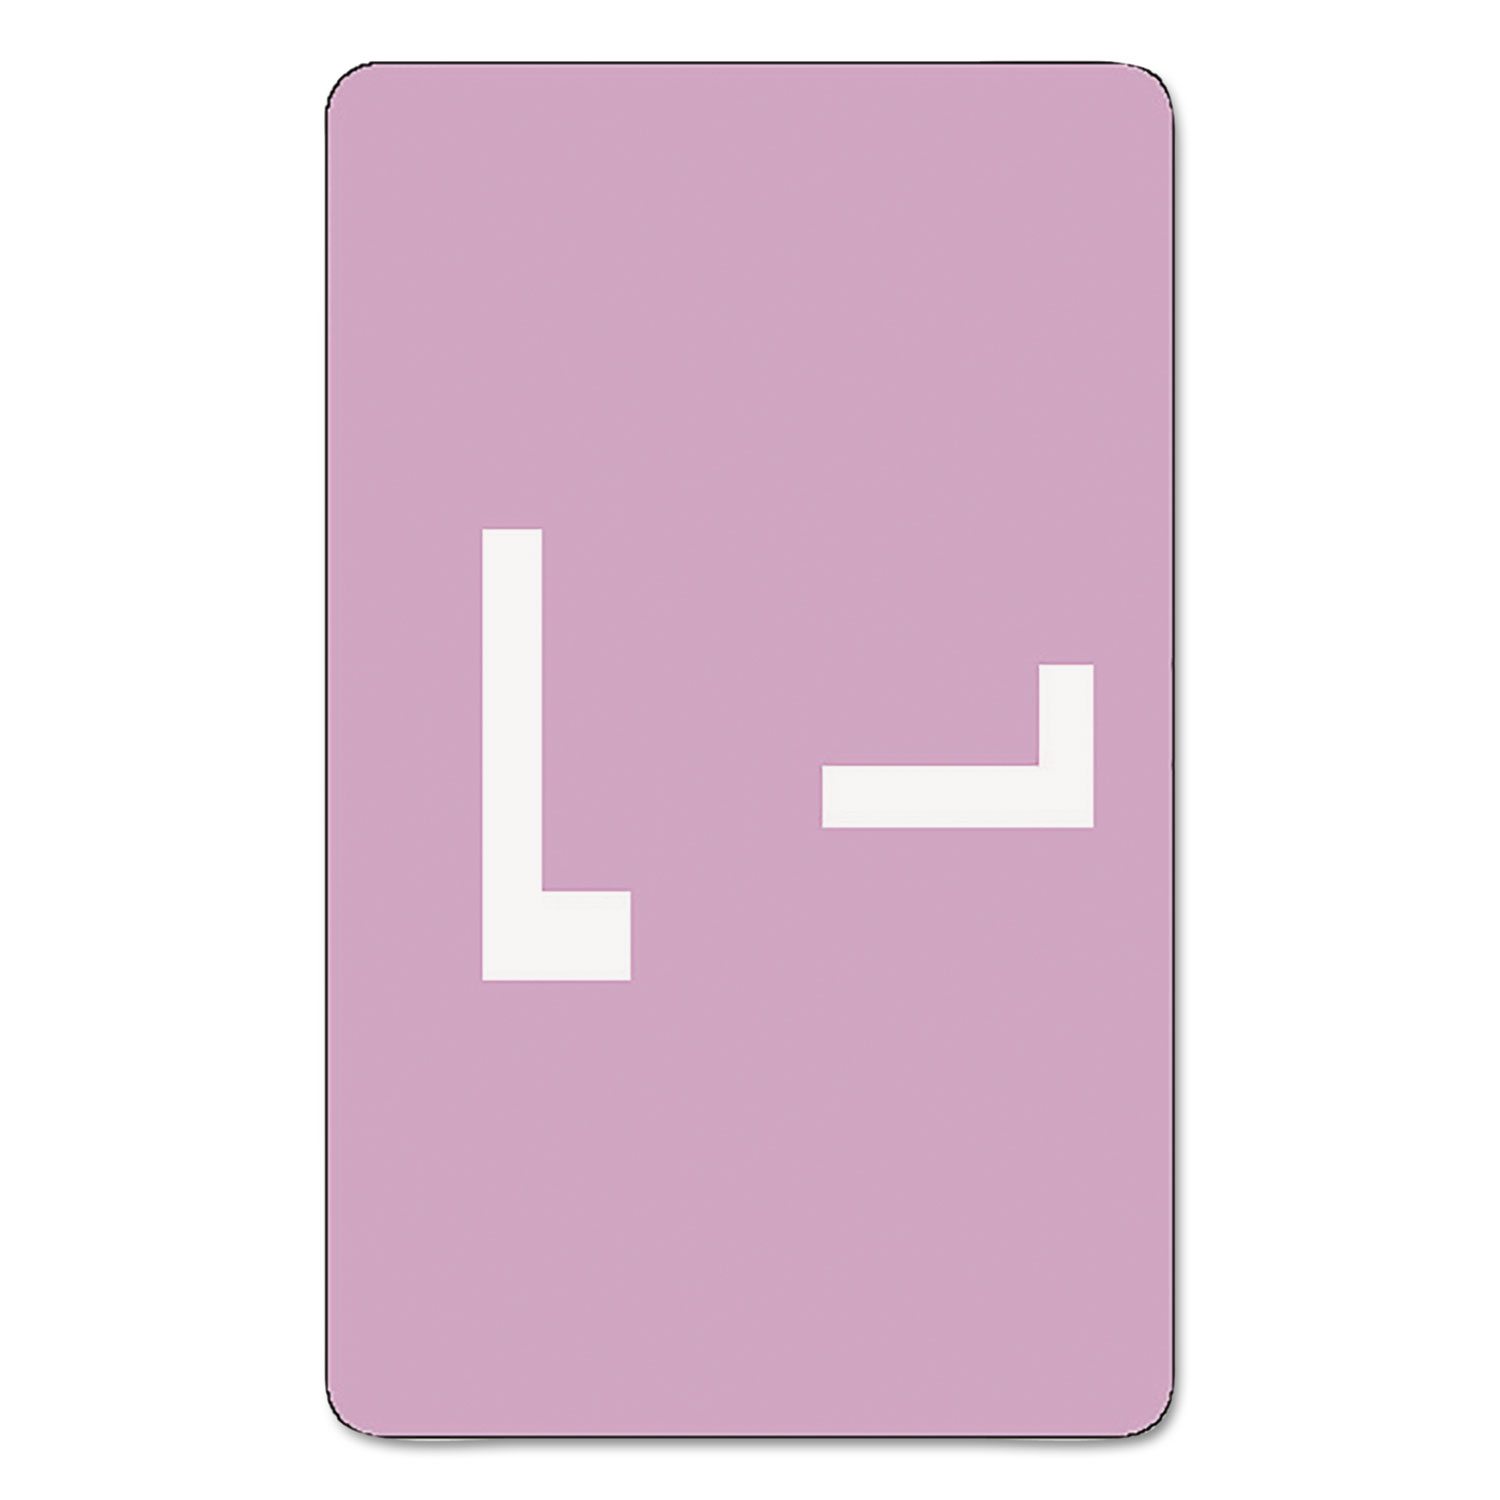  Smead 67182 AlphaZ Color-Coded Second Letter Alphabetical Labels, L, 1 x 1.63, Lavender, 10/Sheet, 10 Sheets/Pack (SMD67182) 